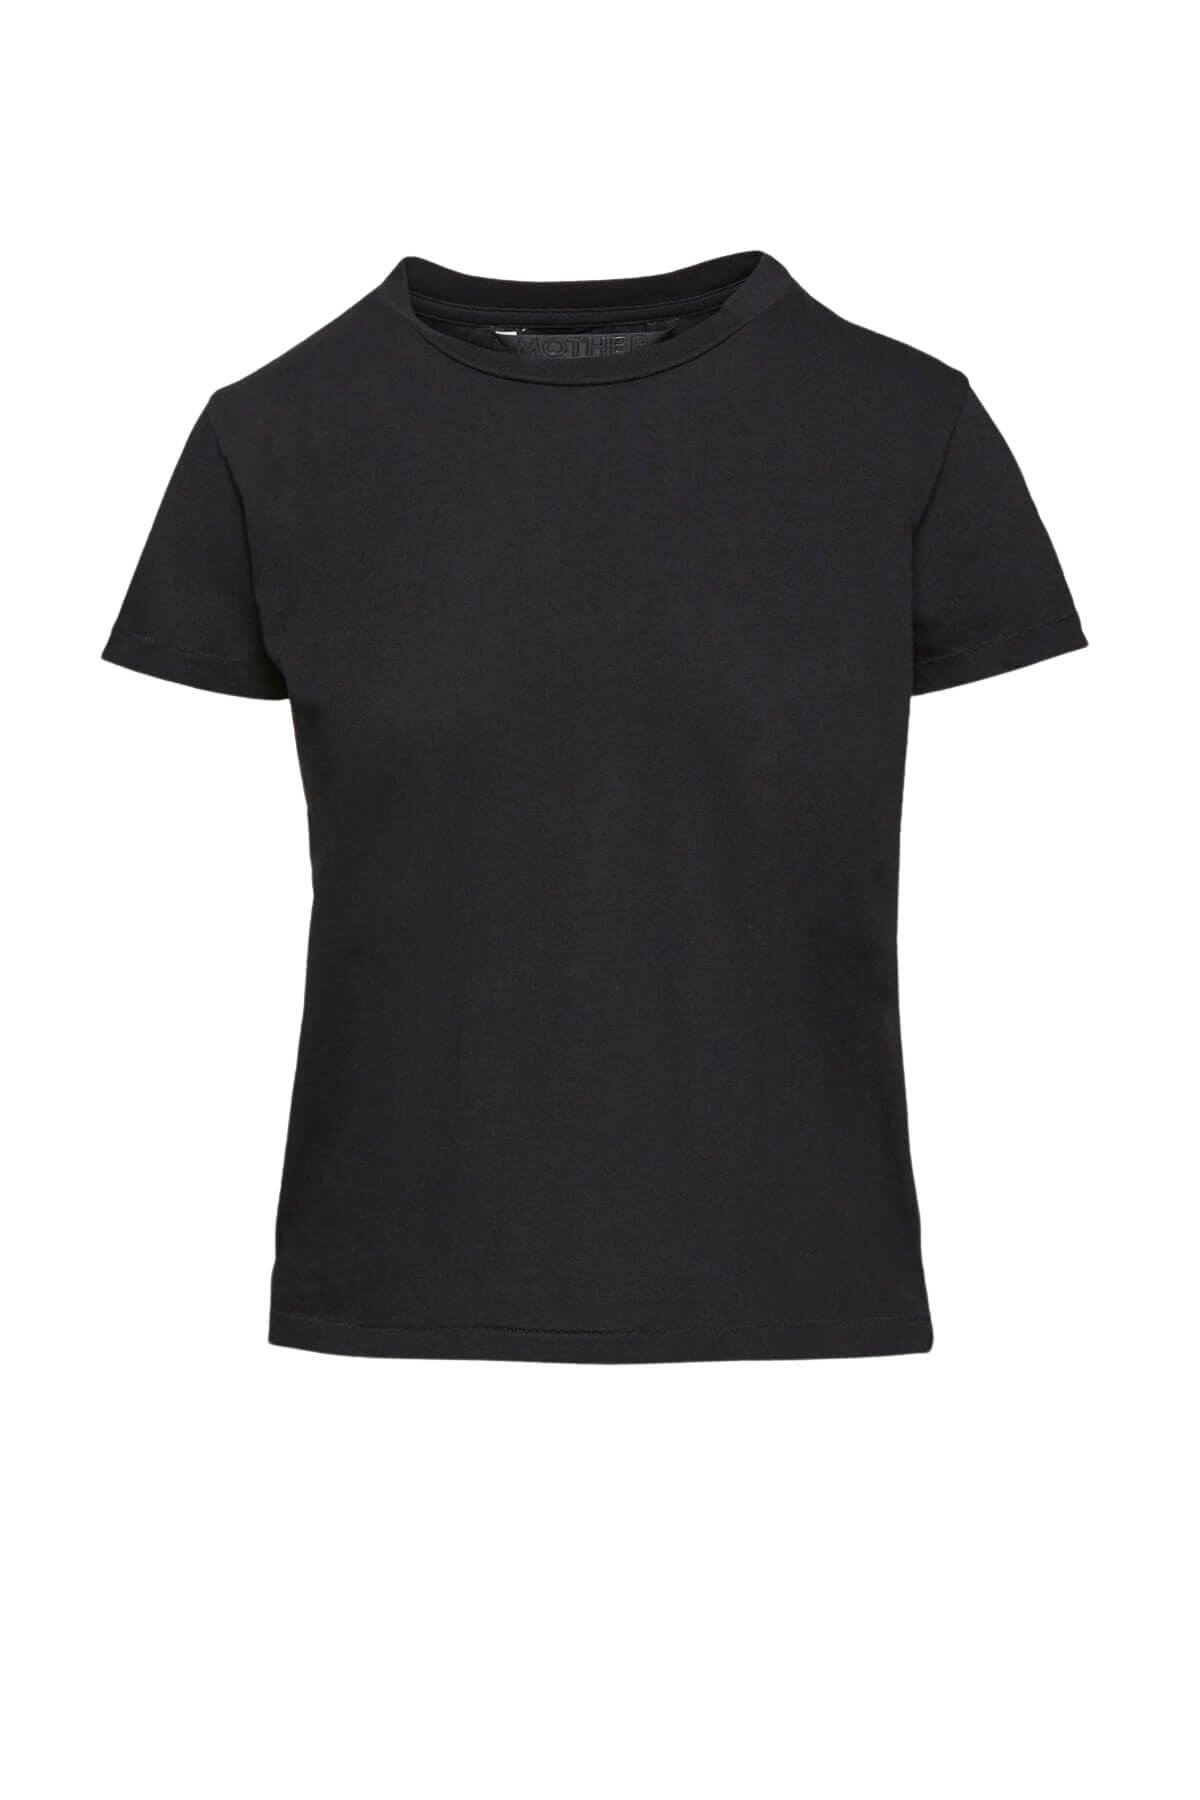 Mother Denim The Lil Goodie Goodie T-Shirt - Black